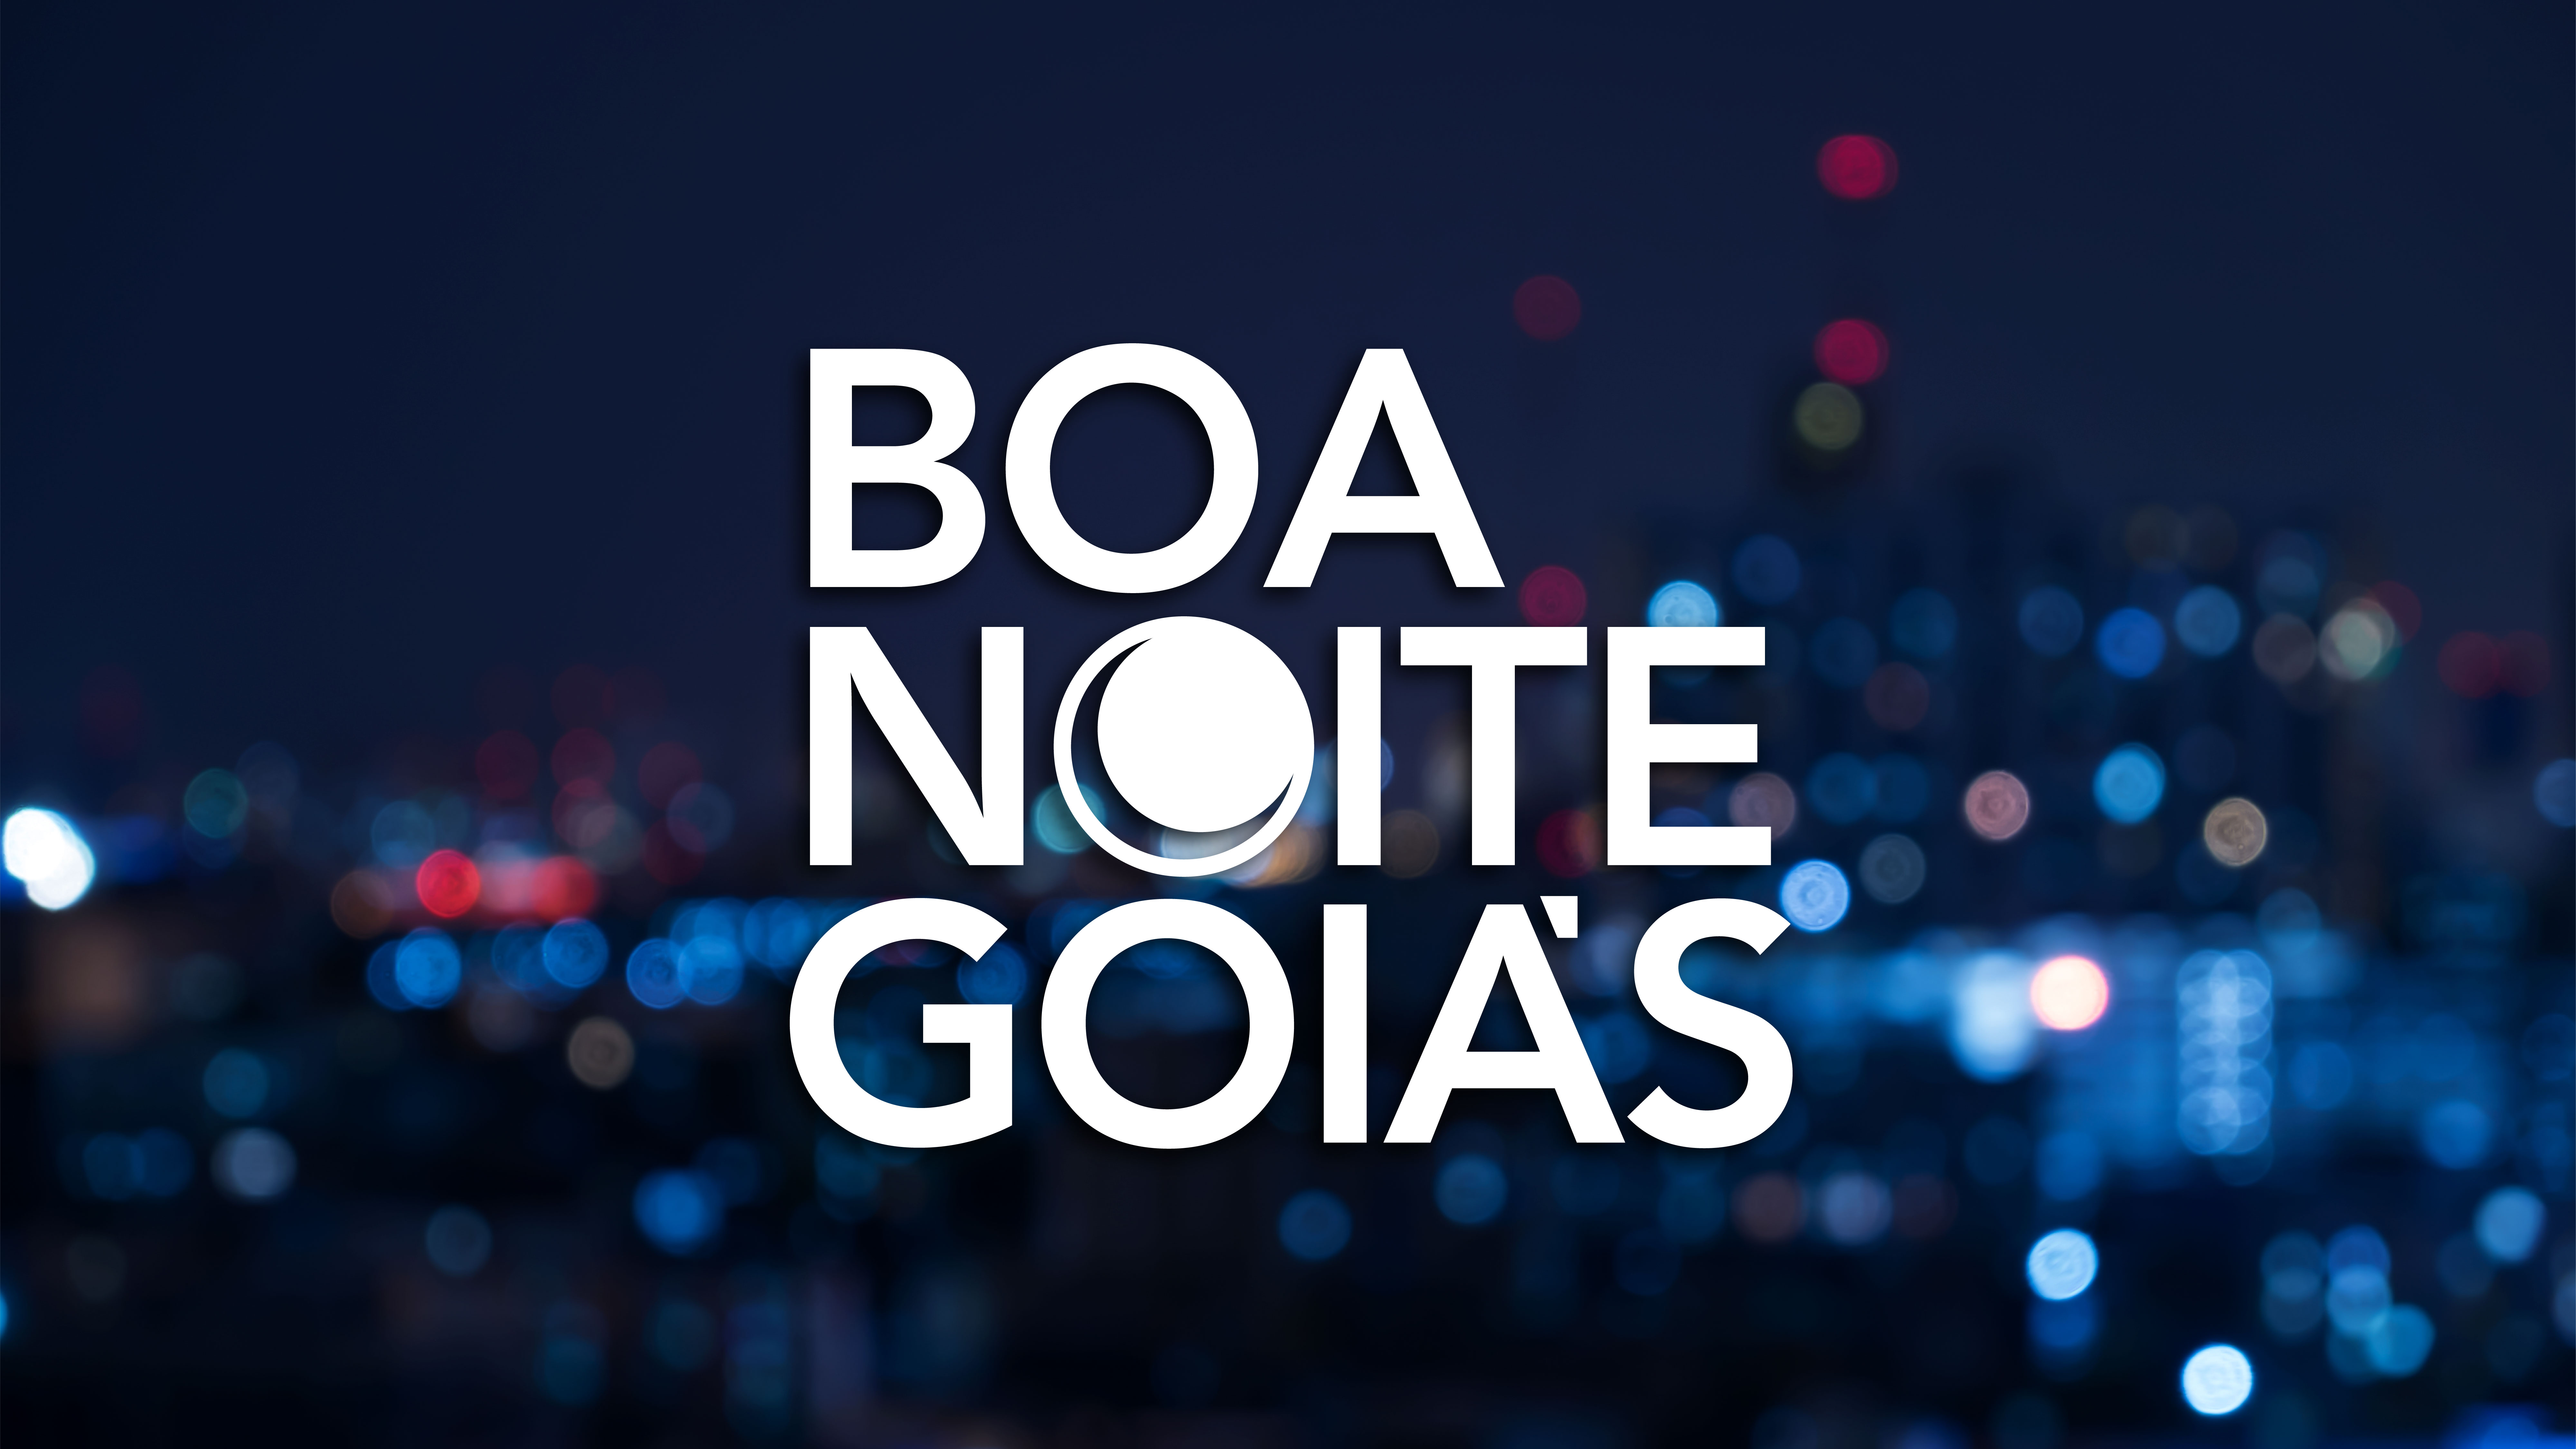 Boa Noite Goiás recebe o presidente do TCMGO